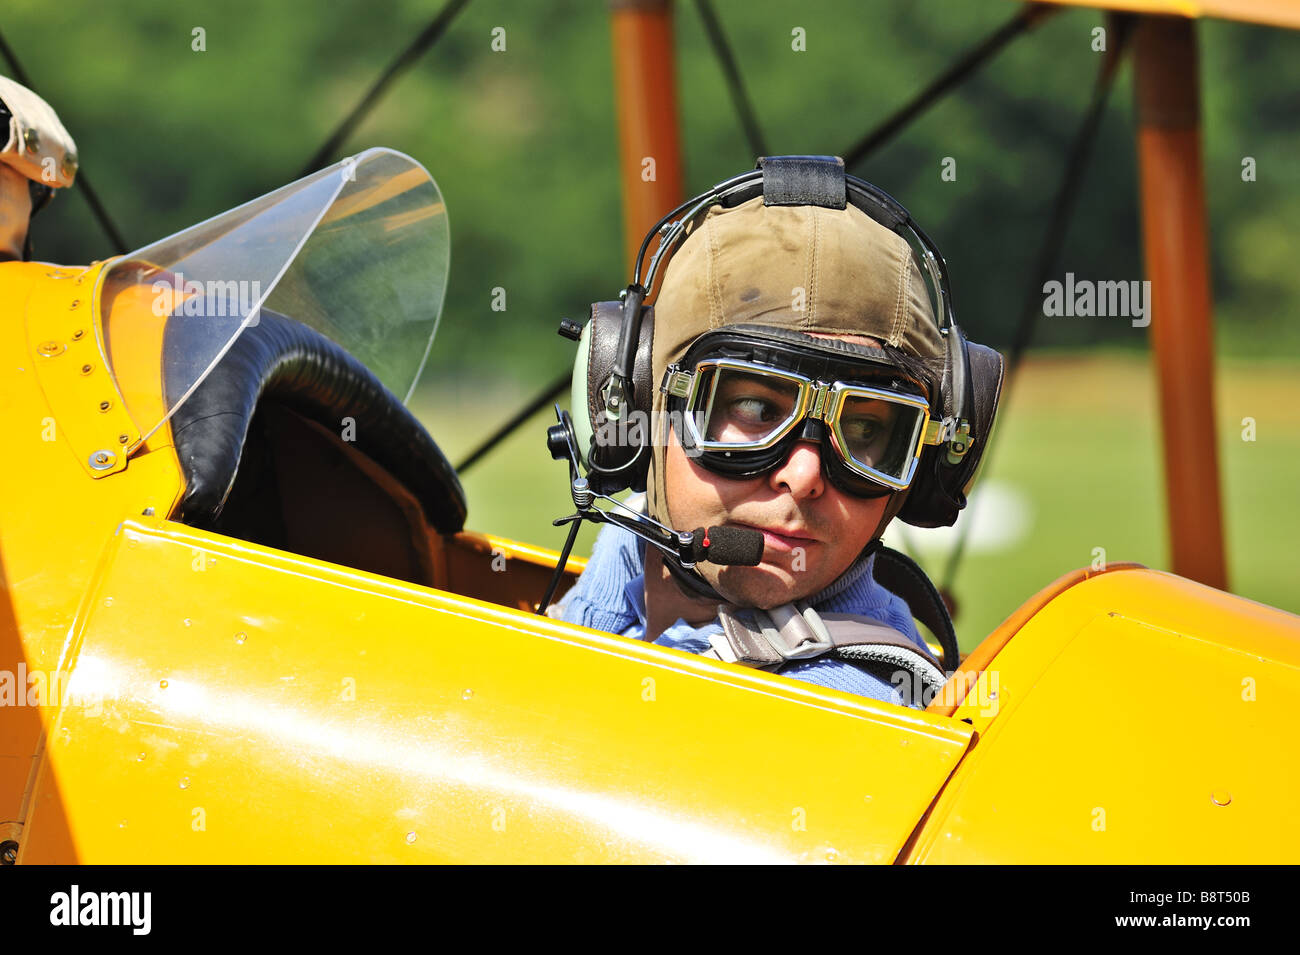 Biplane pilot checks before takeoff Stock Photo